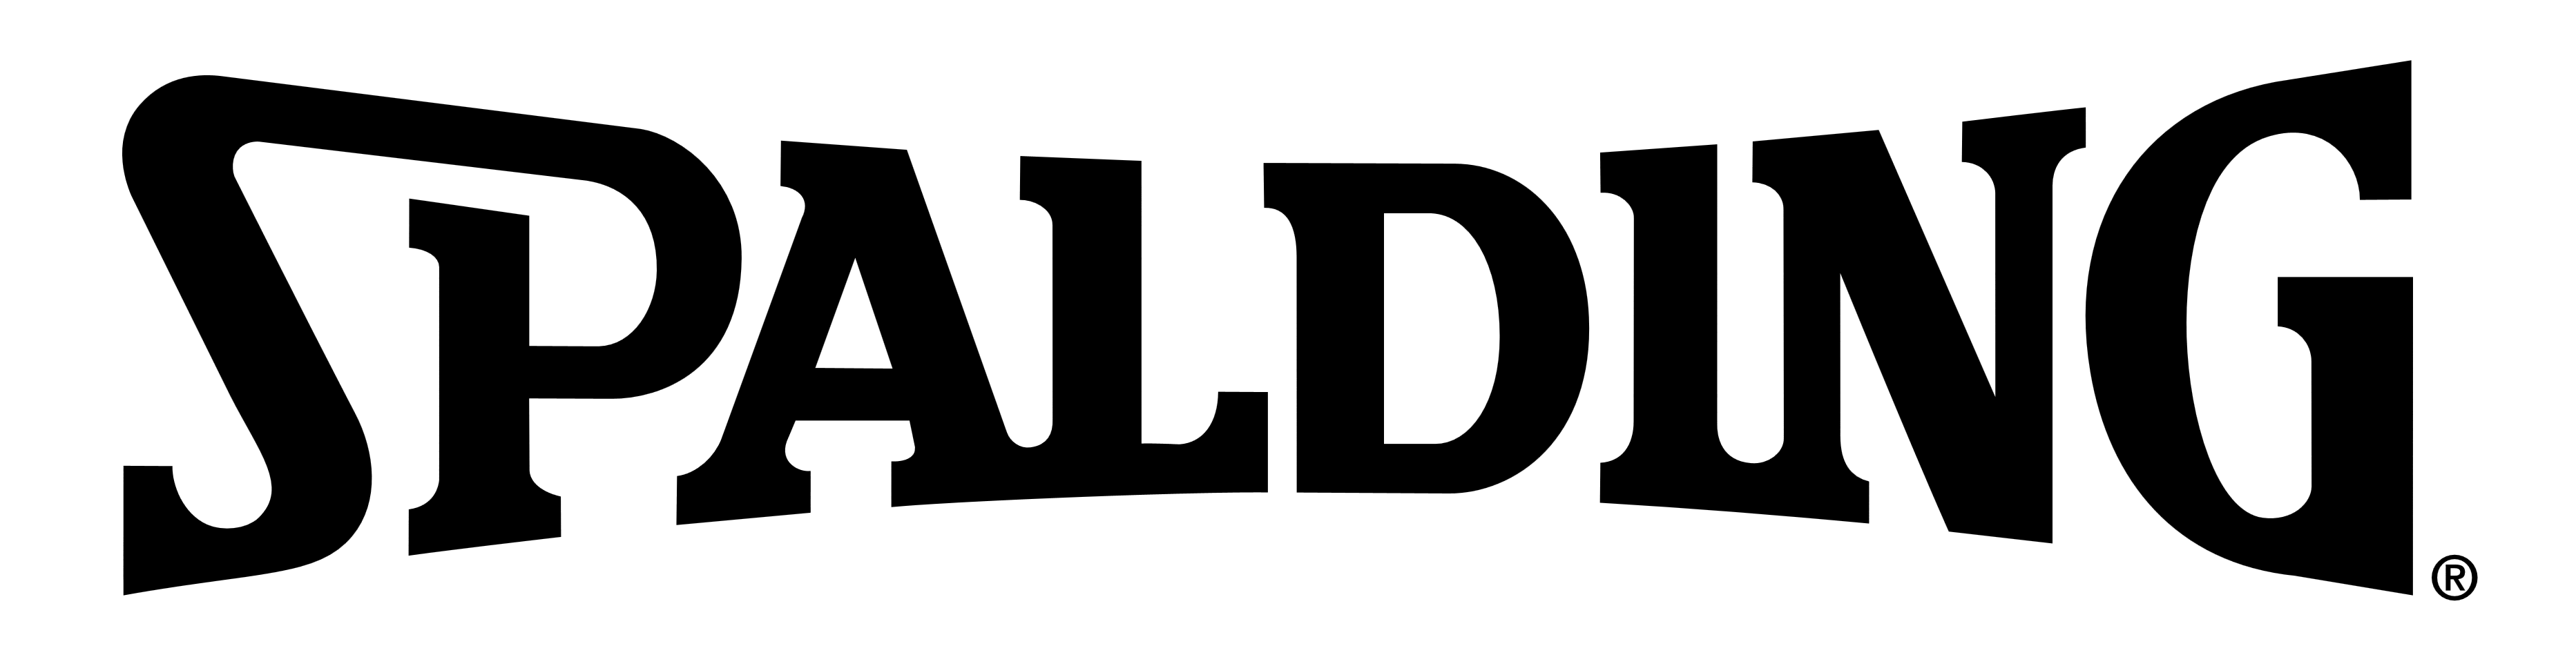 Spaulding Logo - Spalding